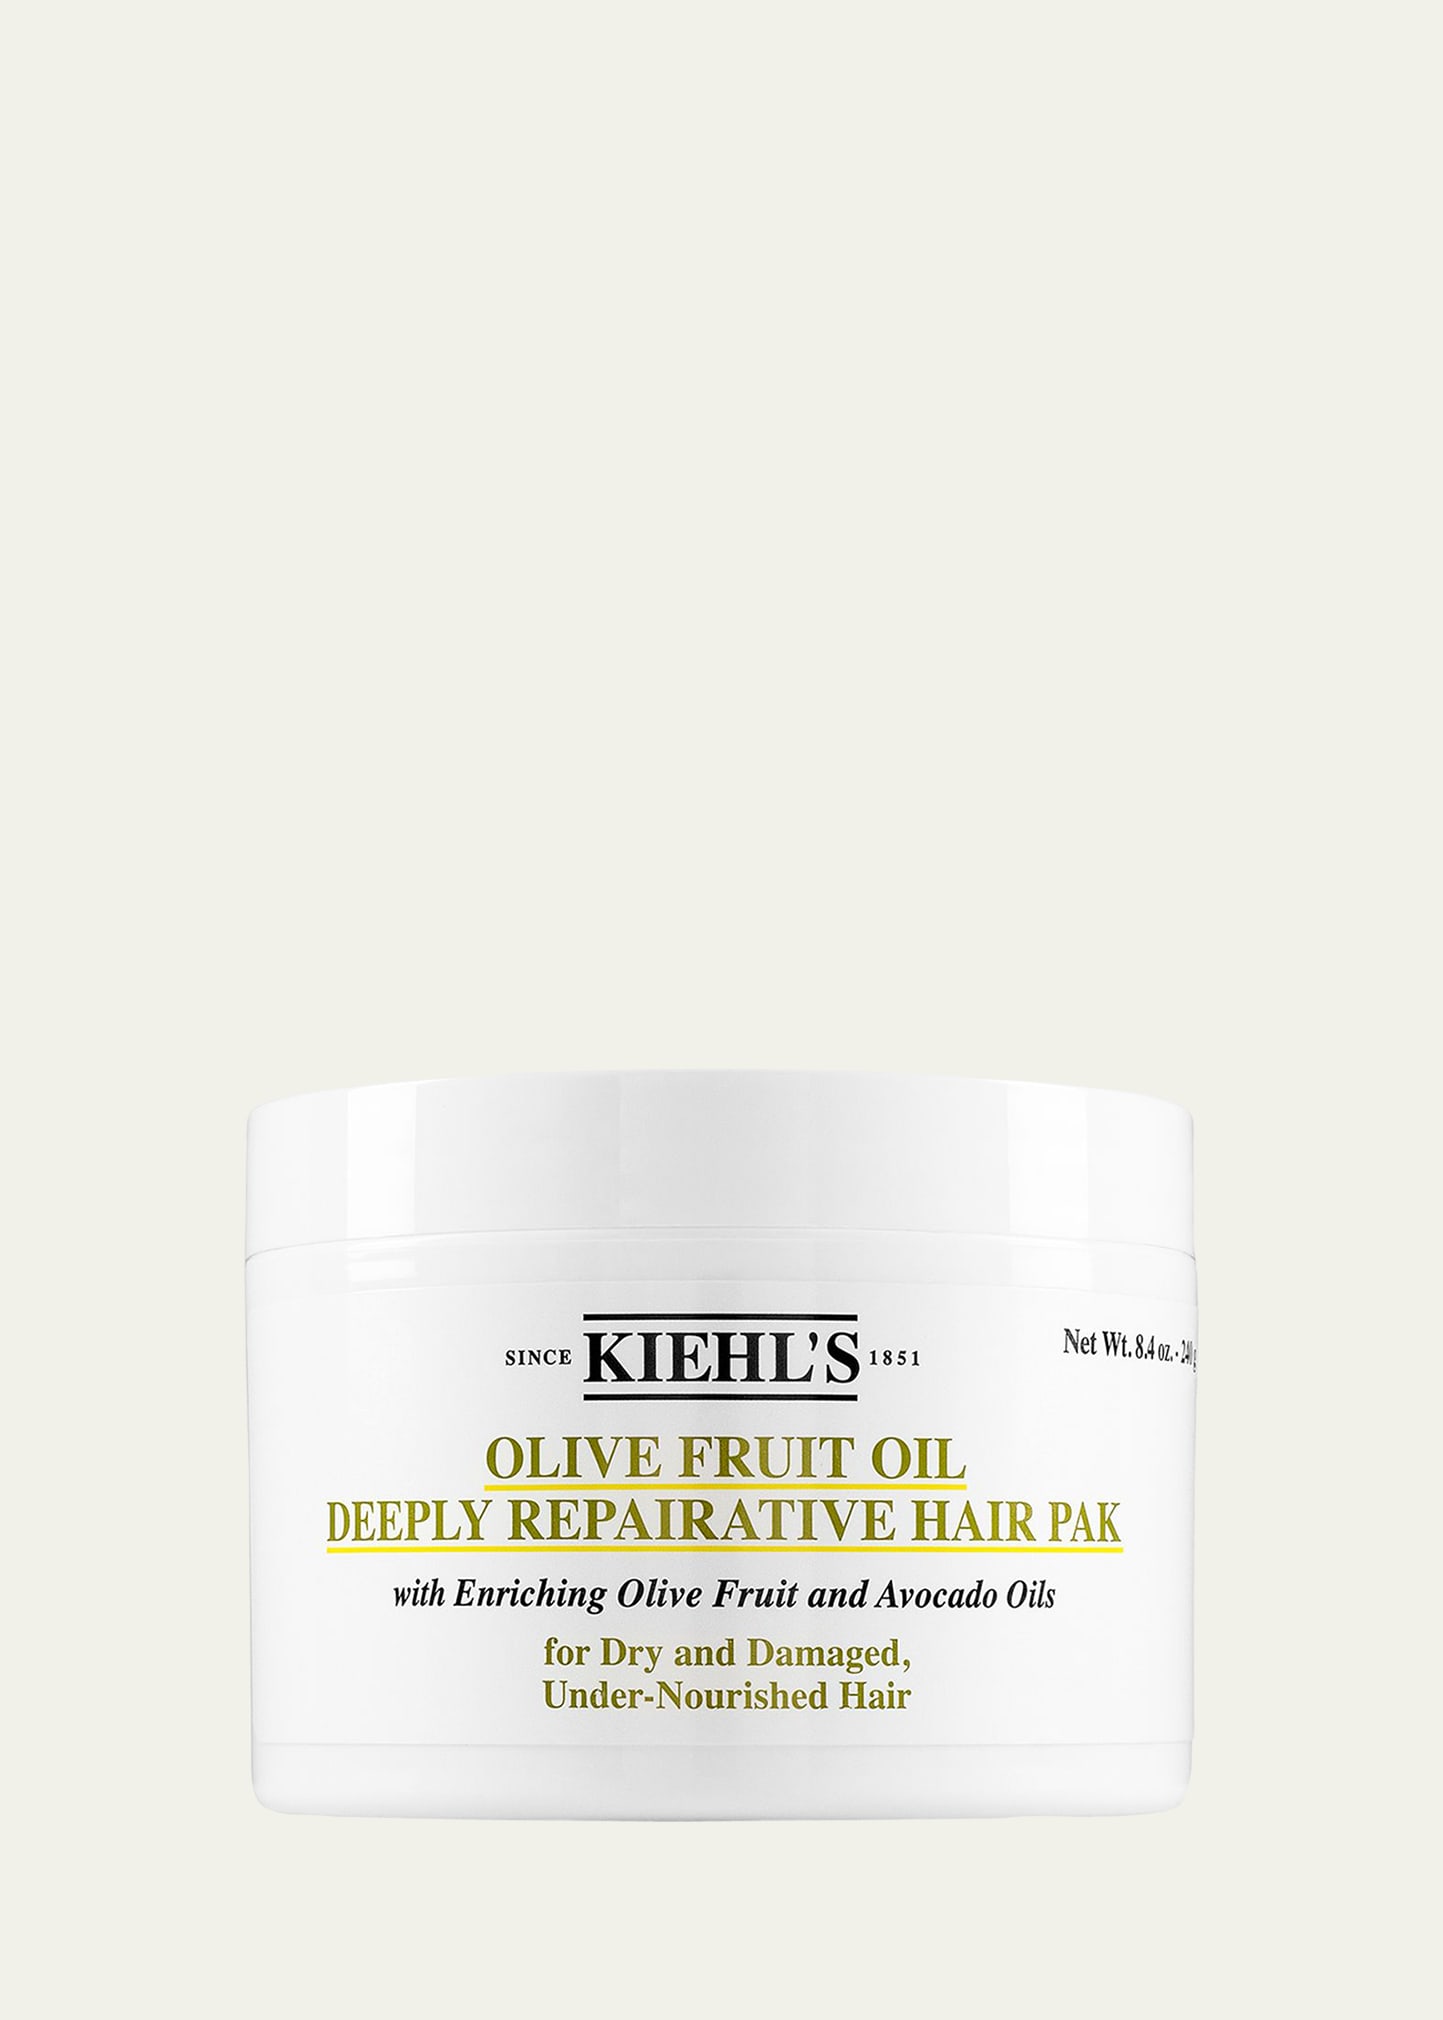 8.4 oz. Olive Fruit Oil Deeply Repairative Hair Pak